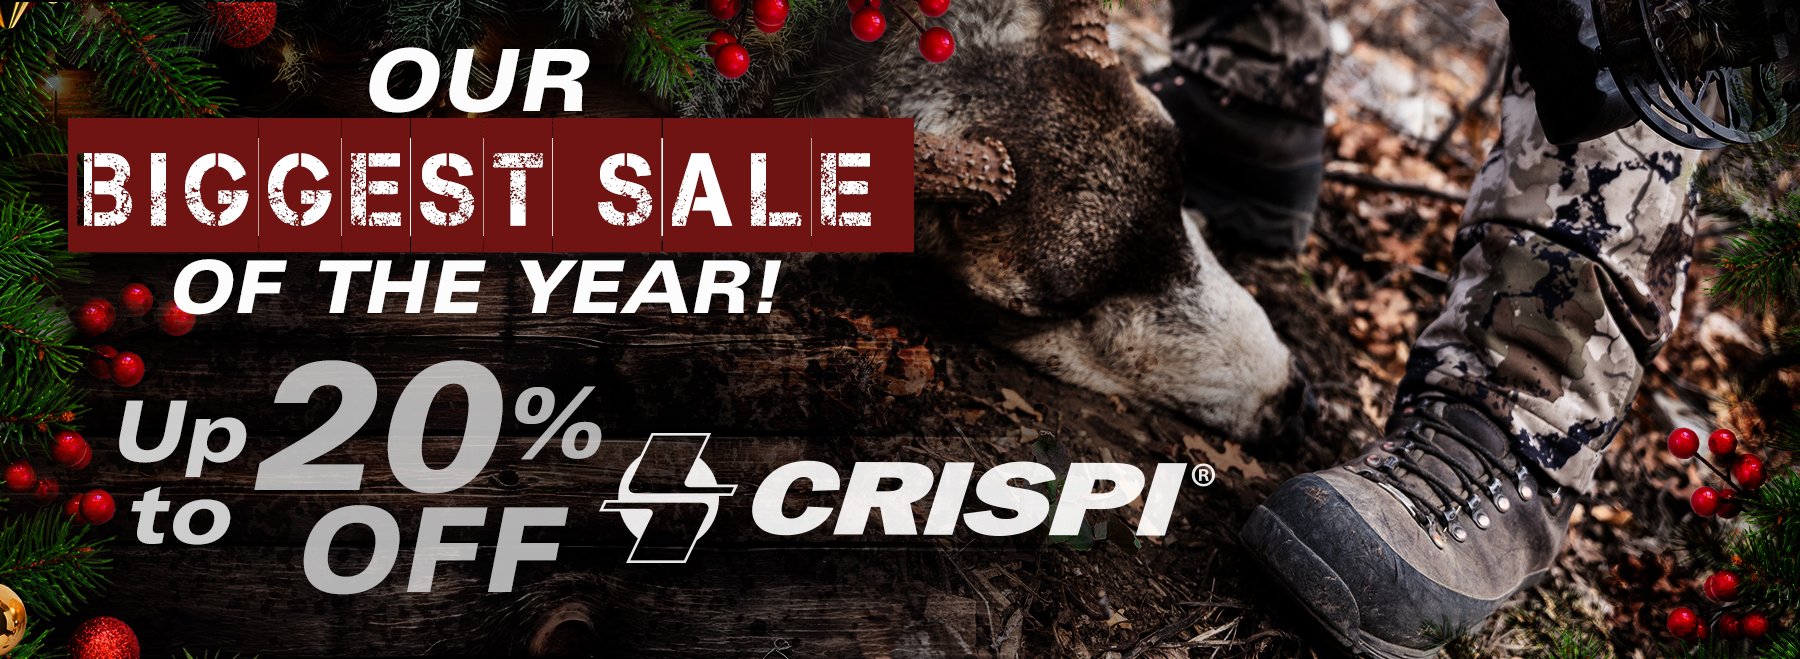 Shop the Crispi Boot Sale